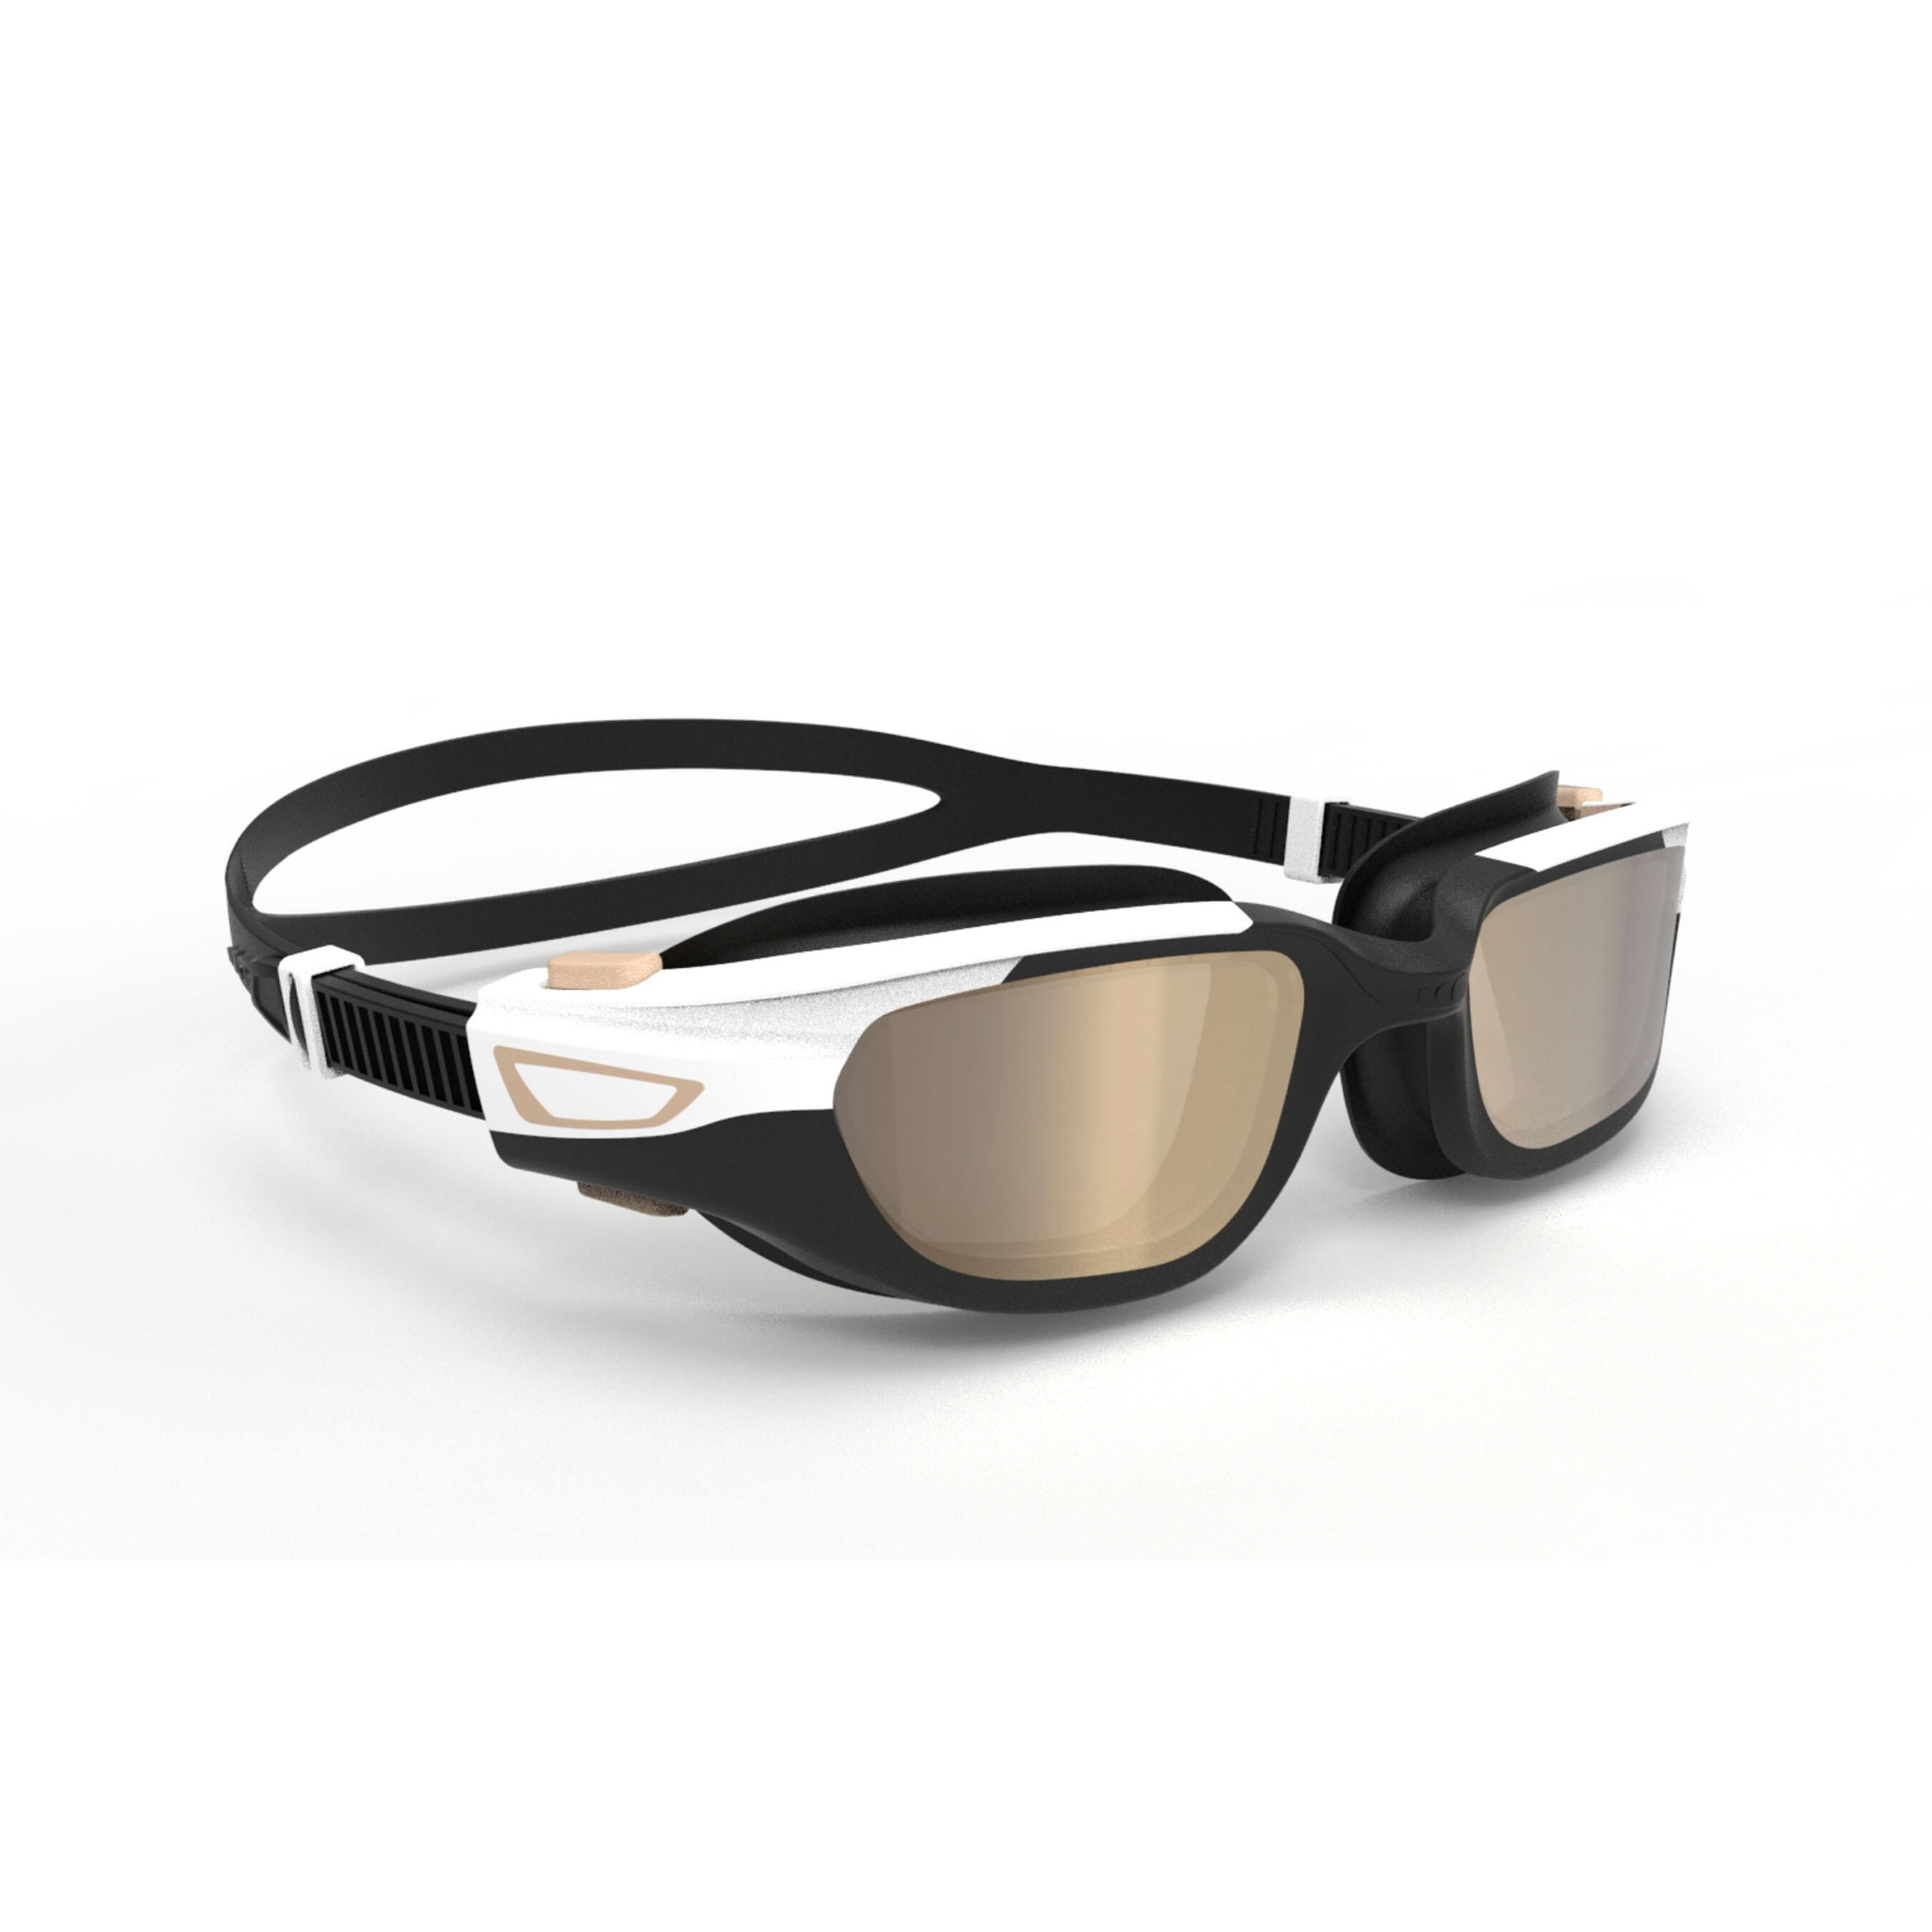 Swimming SPIRIT goggles - Mirror lenses - Large - Black beige white 1/1